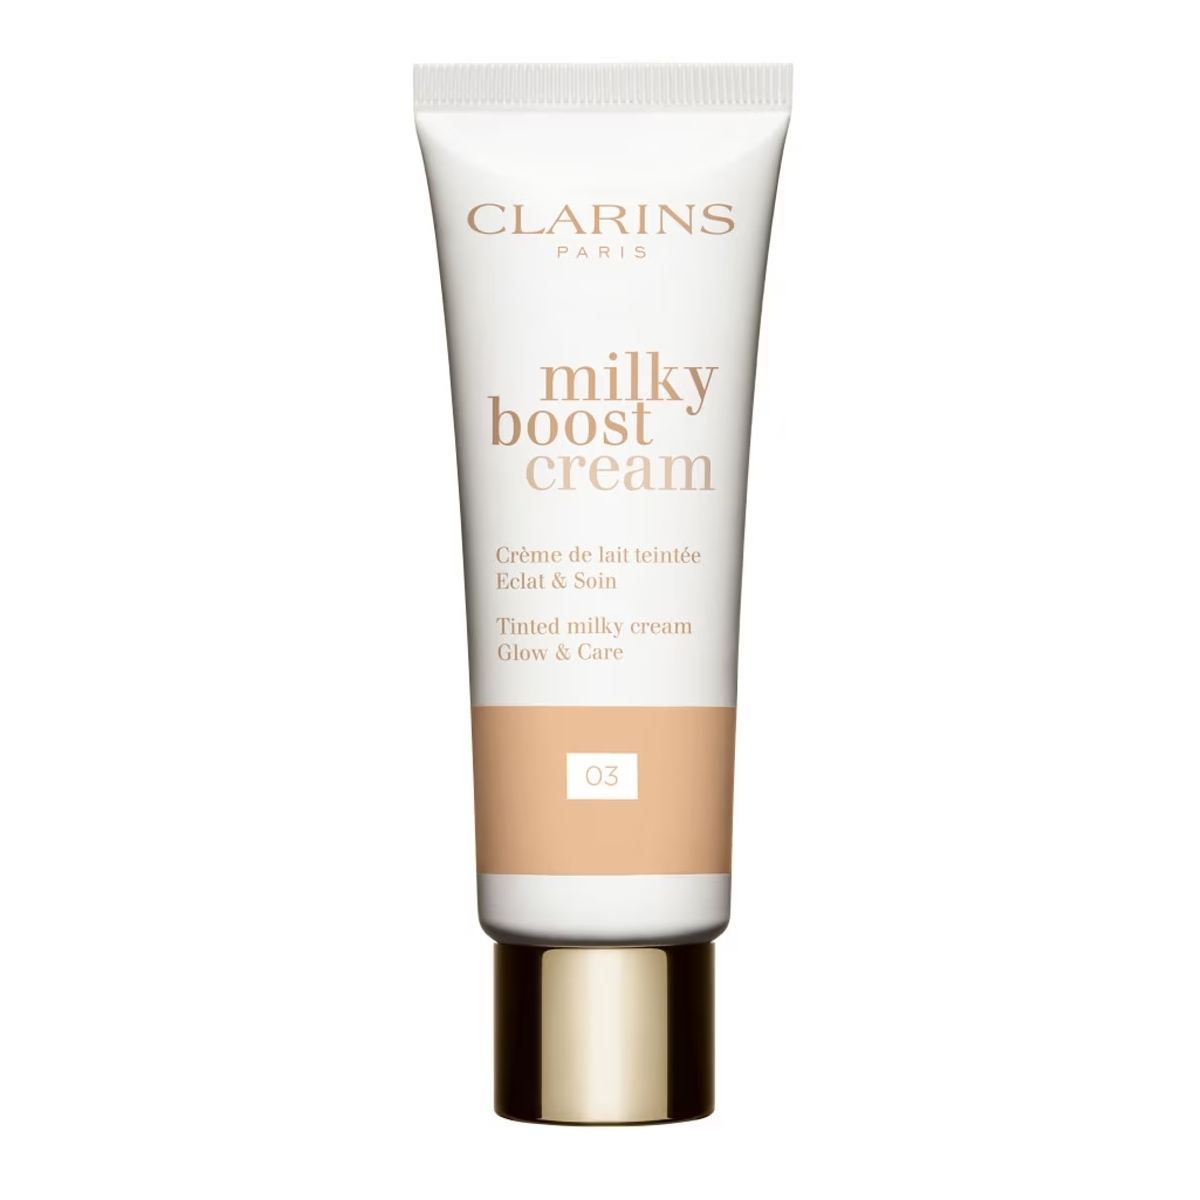 Milky Boost Cream 03 de Clarins.